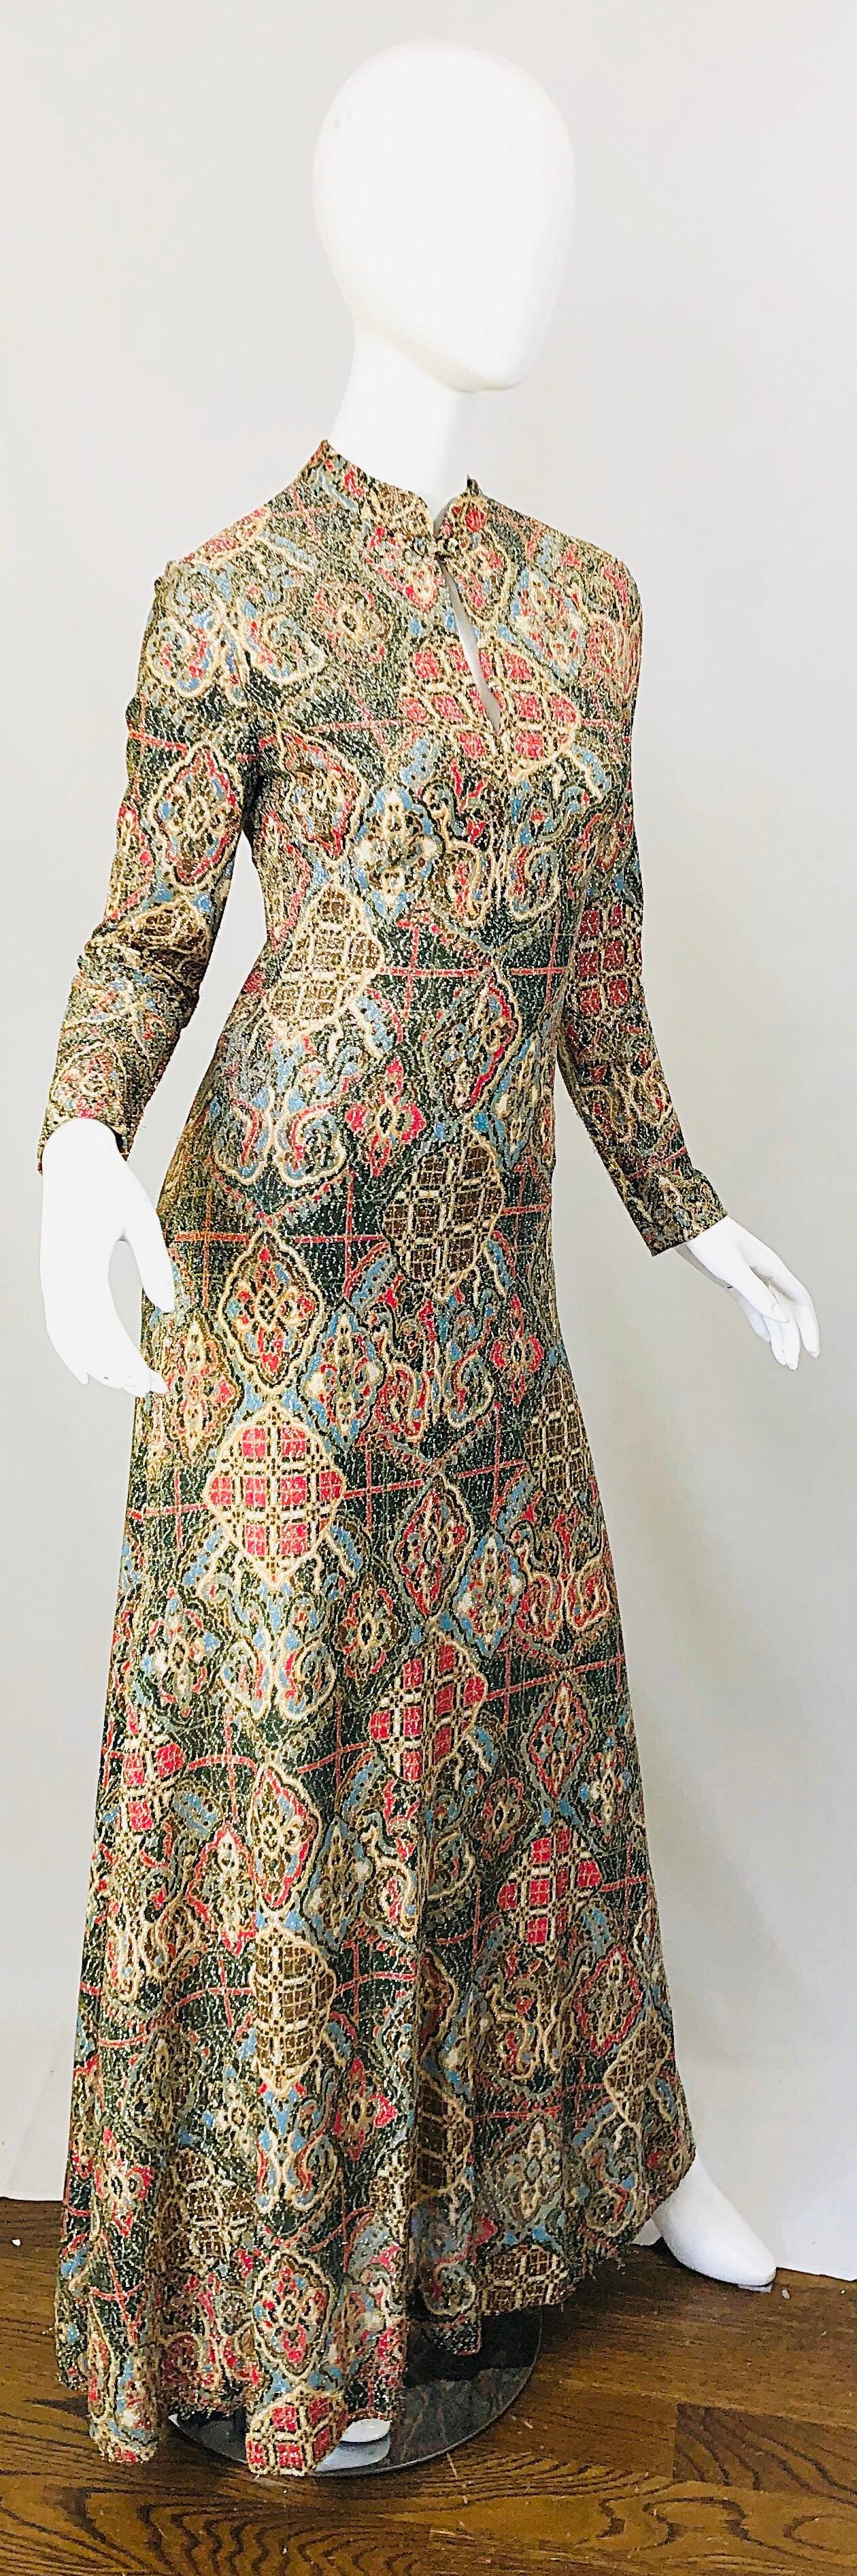 1970s Adele Simpson Lurex Silk Metallic Baroque Ethnic Print Cheongsam 70s Gown  3